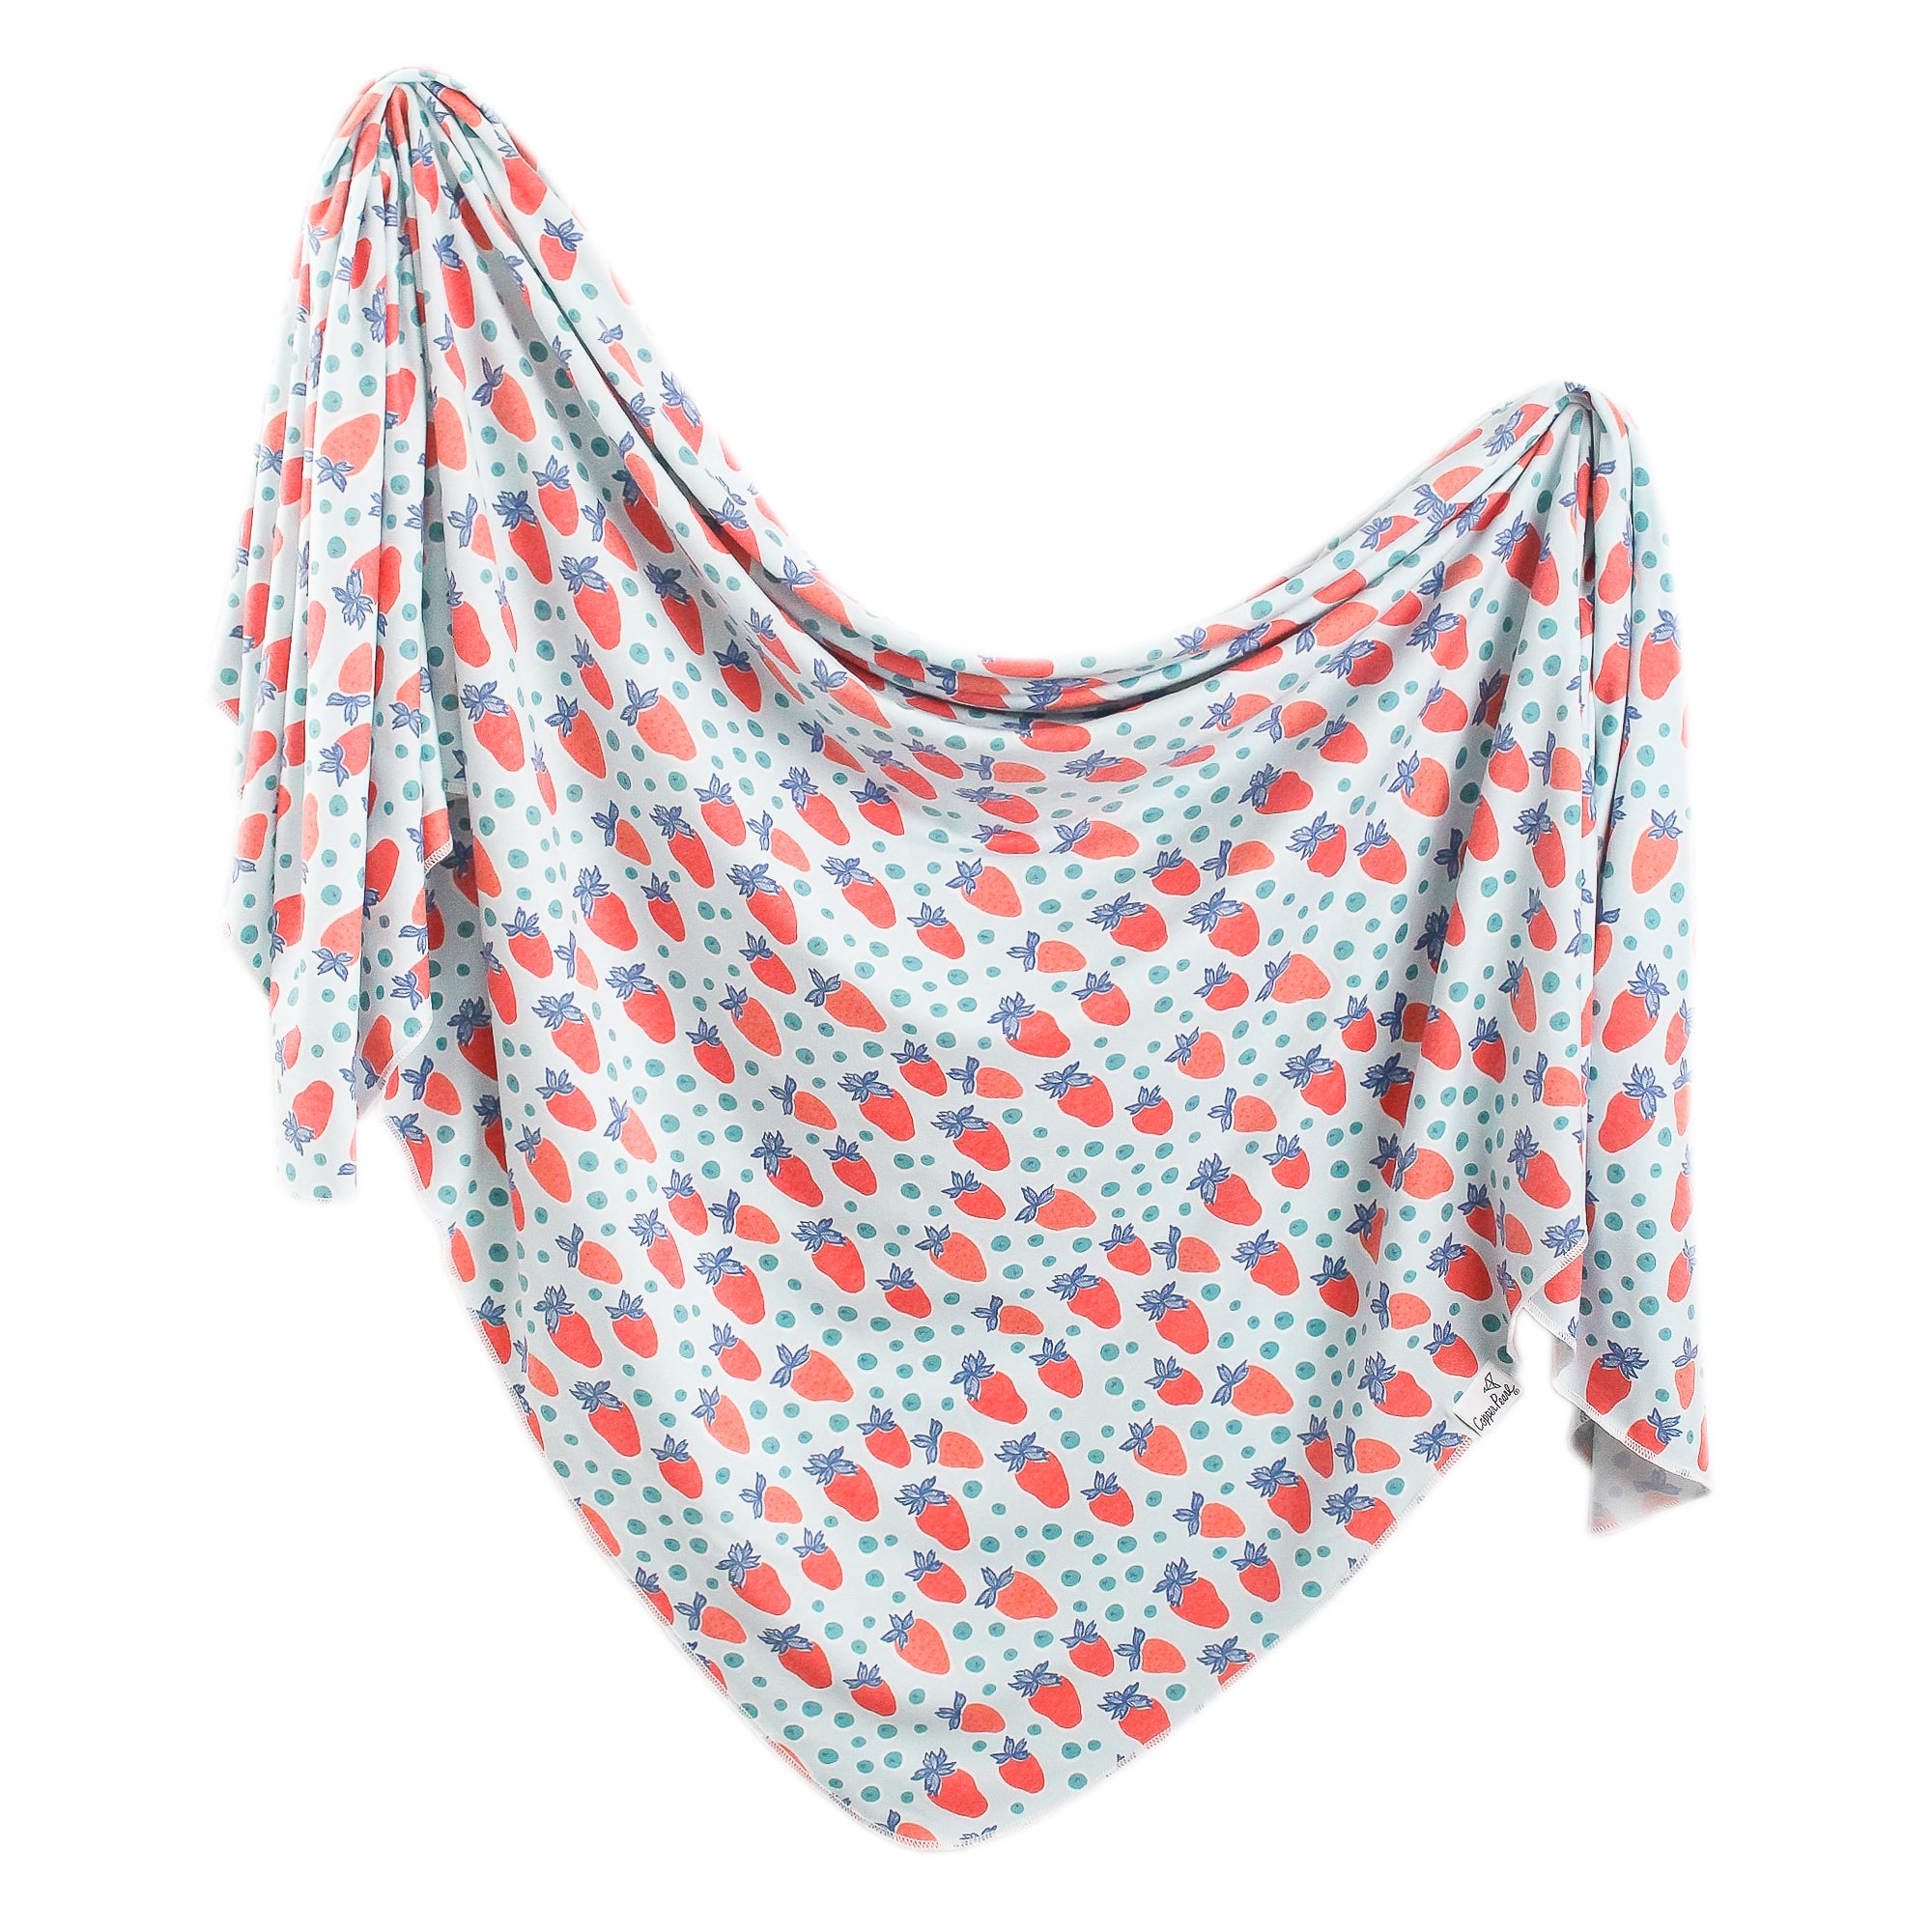 Knit Swaddle Blanket - Liberty